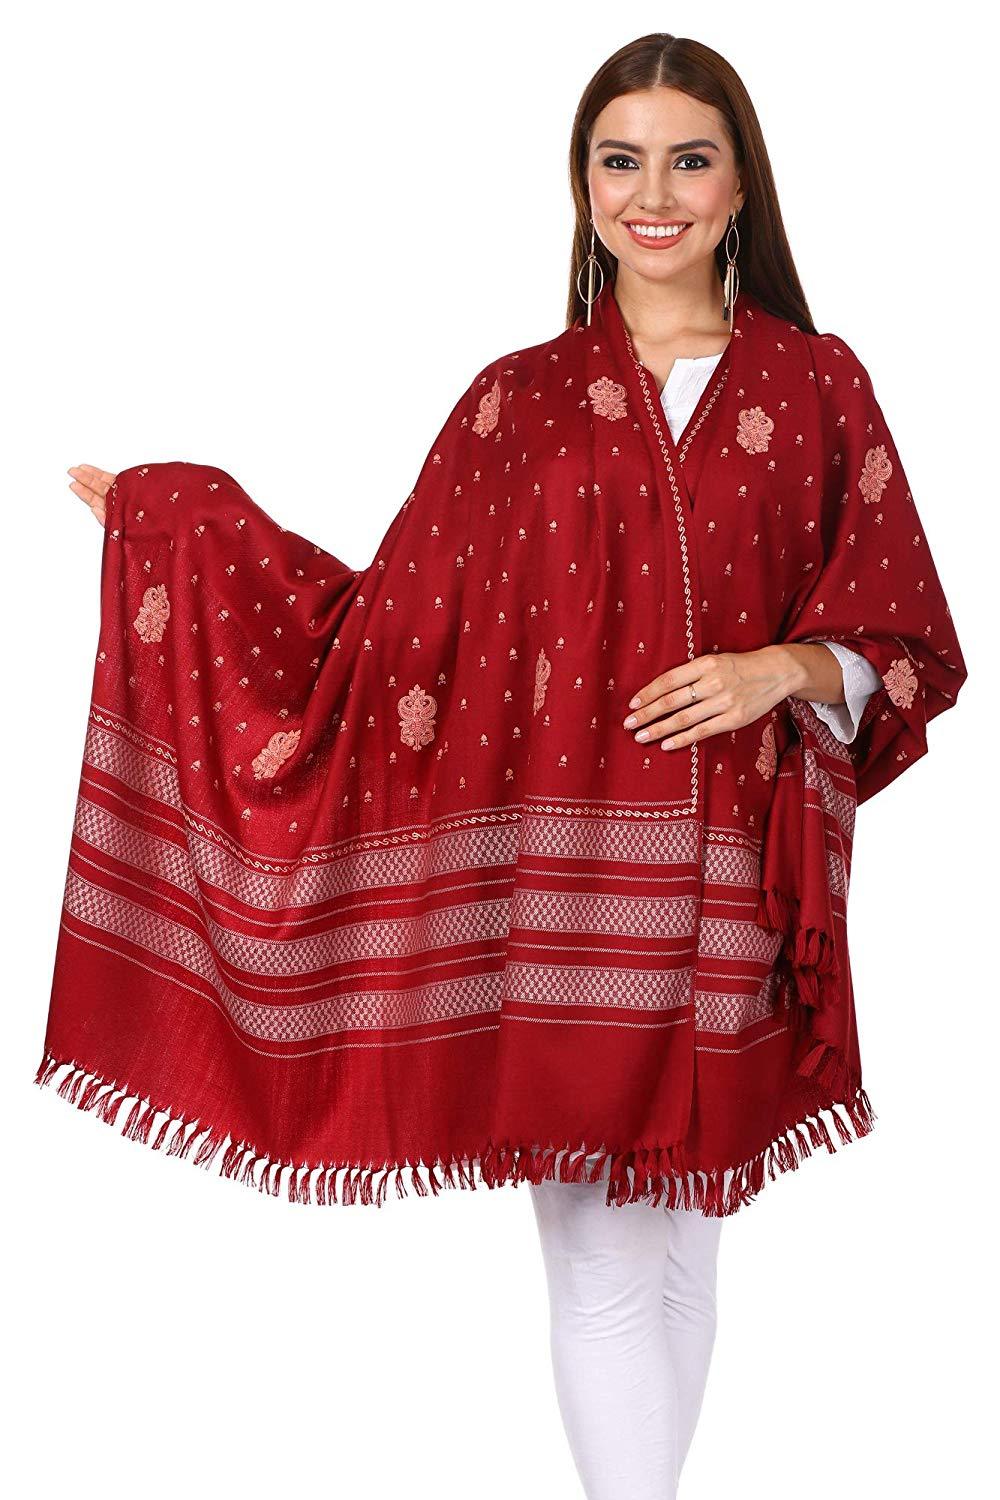 Pashtush Women'S Wool Shawl With Fineembroidery, Shawl Needlework Embroidery (Maroon)